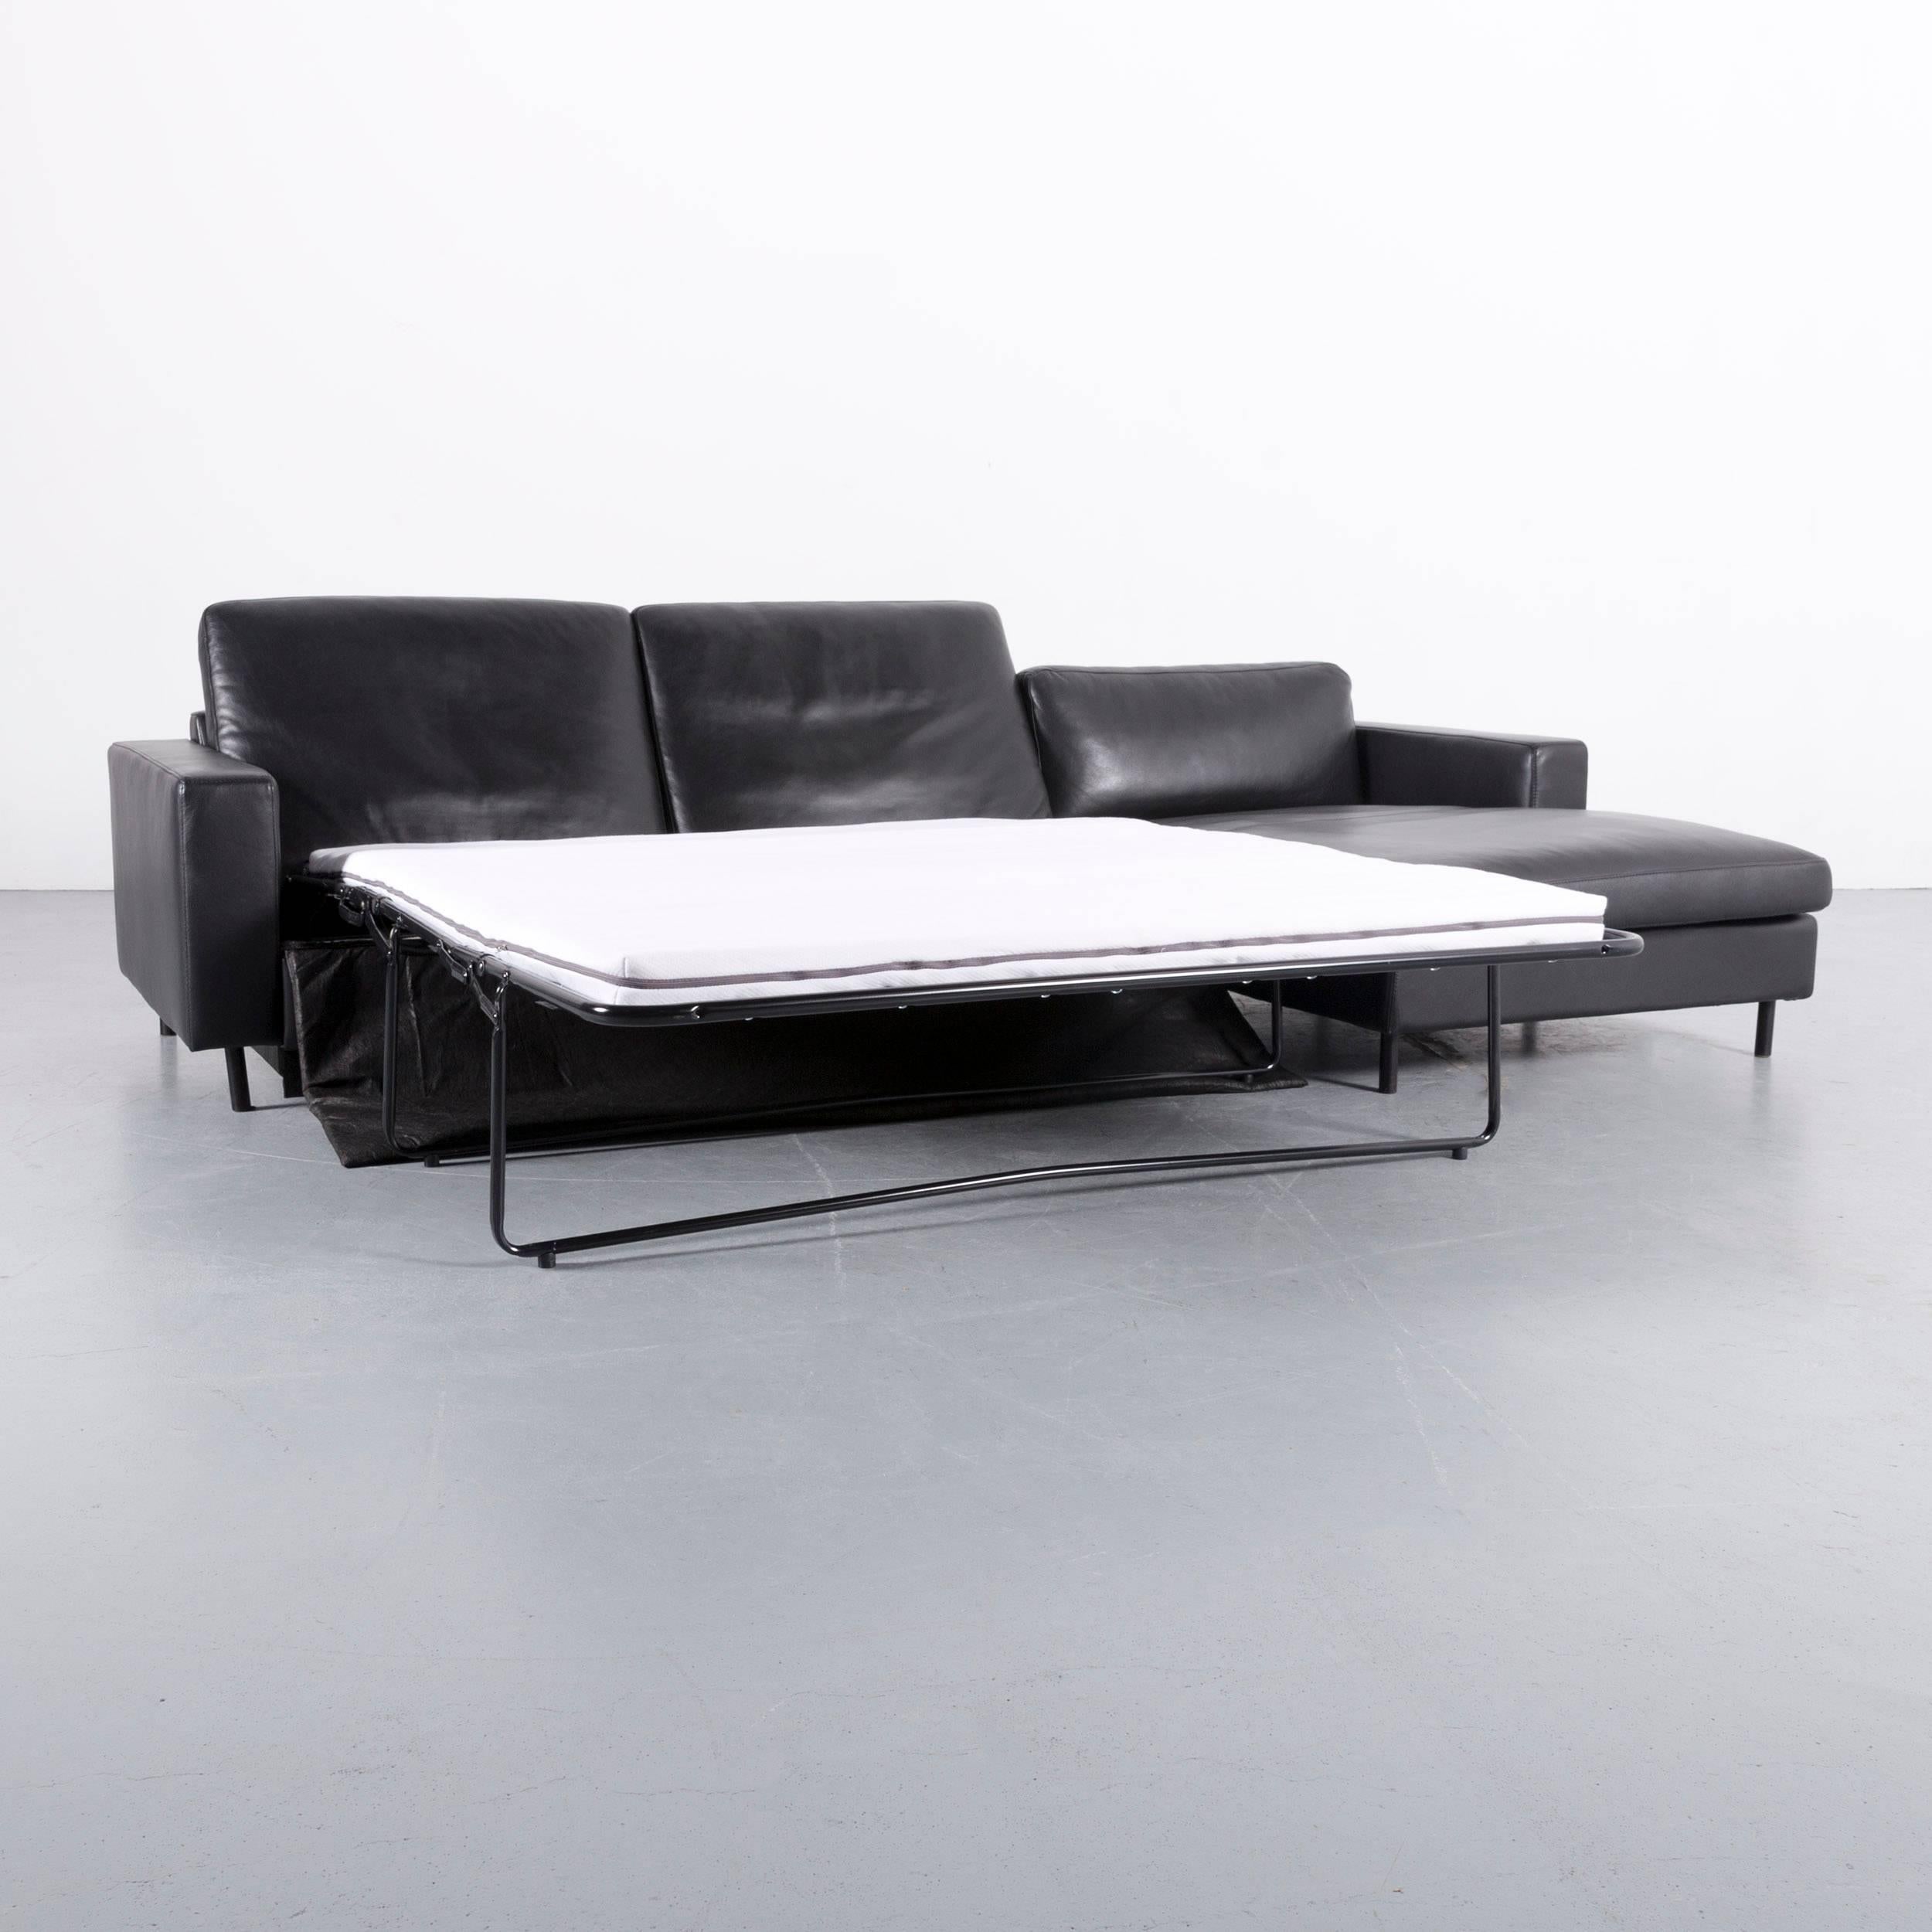 We bring to you an Bolia leather corner-sofa black bed-sofa.



























